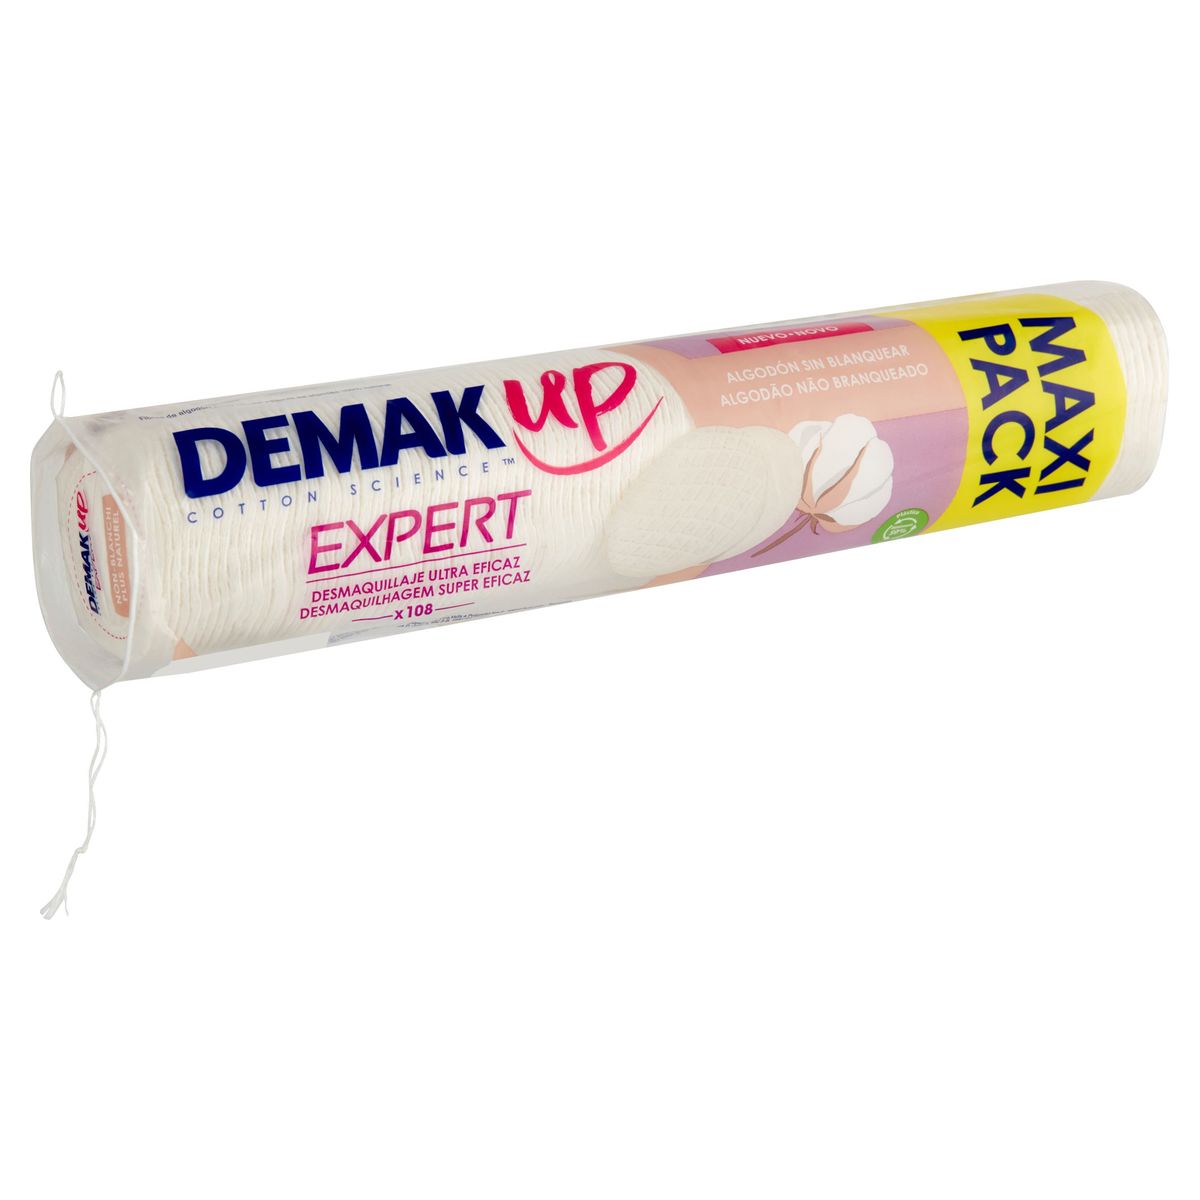 Demak'Up Expert Démaquillage Ultra-Efficace Maxi Pack 108 Pièces